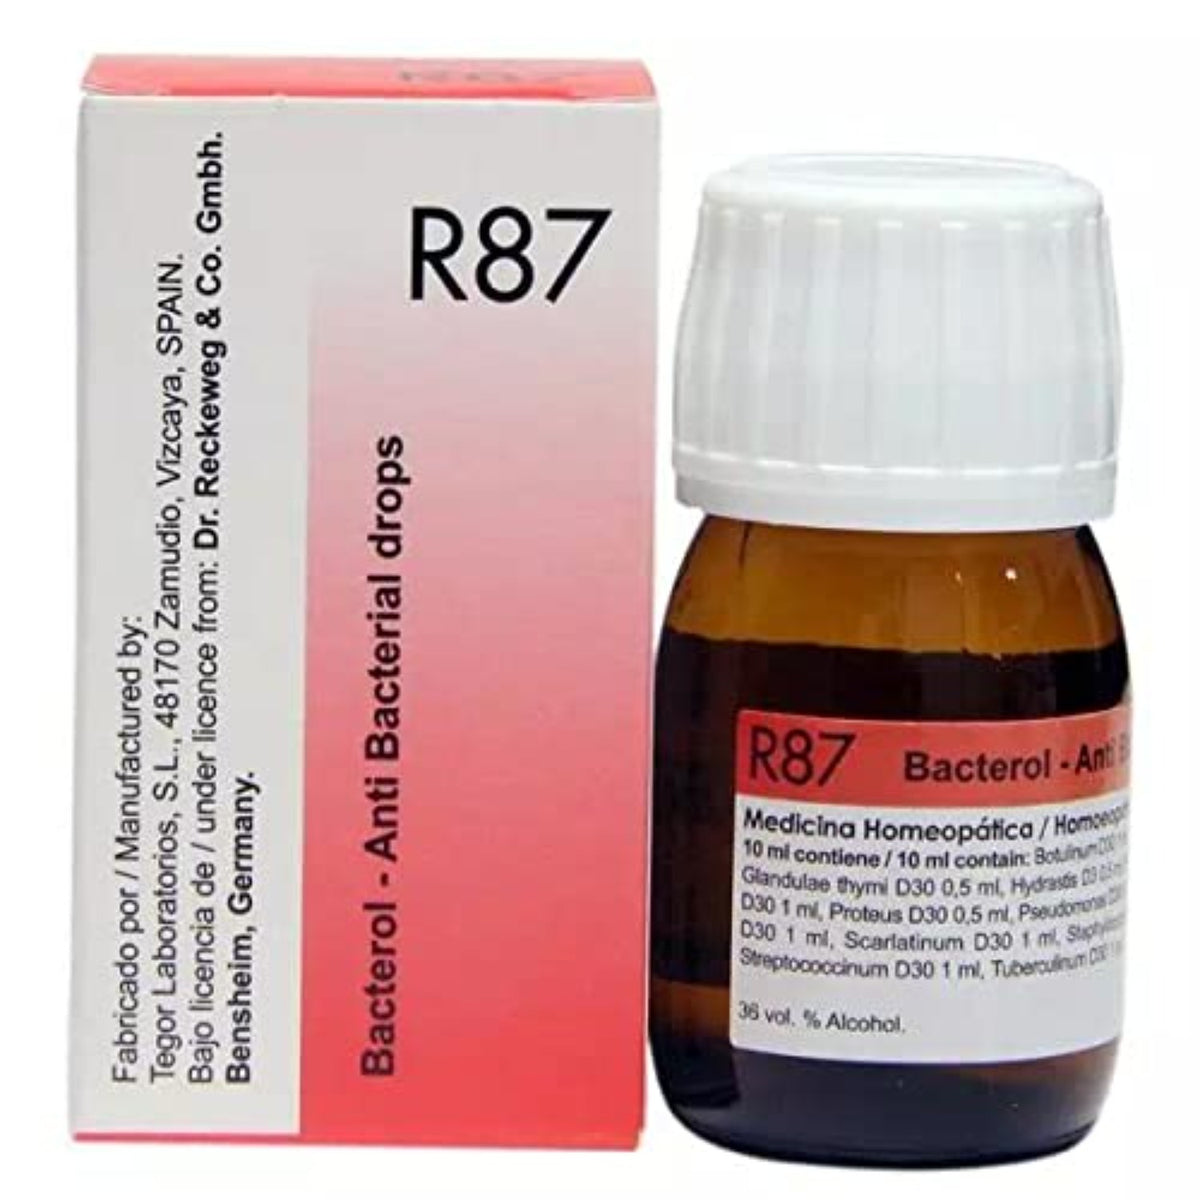 Dr Reckeweg Homoeopathy R87 Anti Bacterial Drops 22 ml